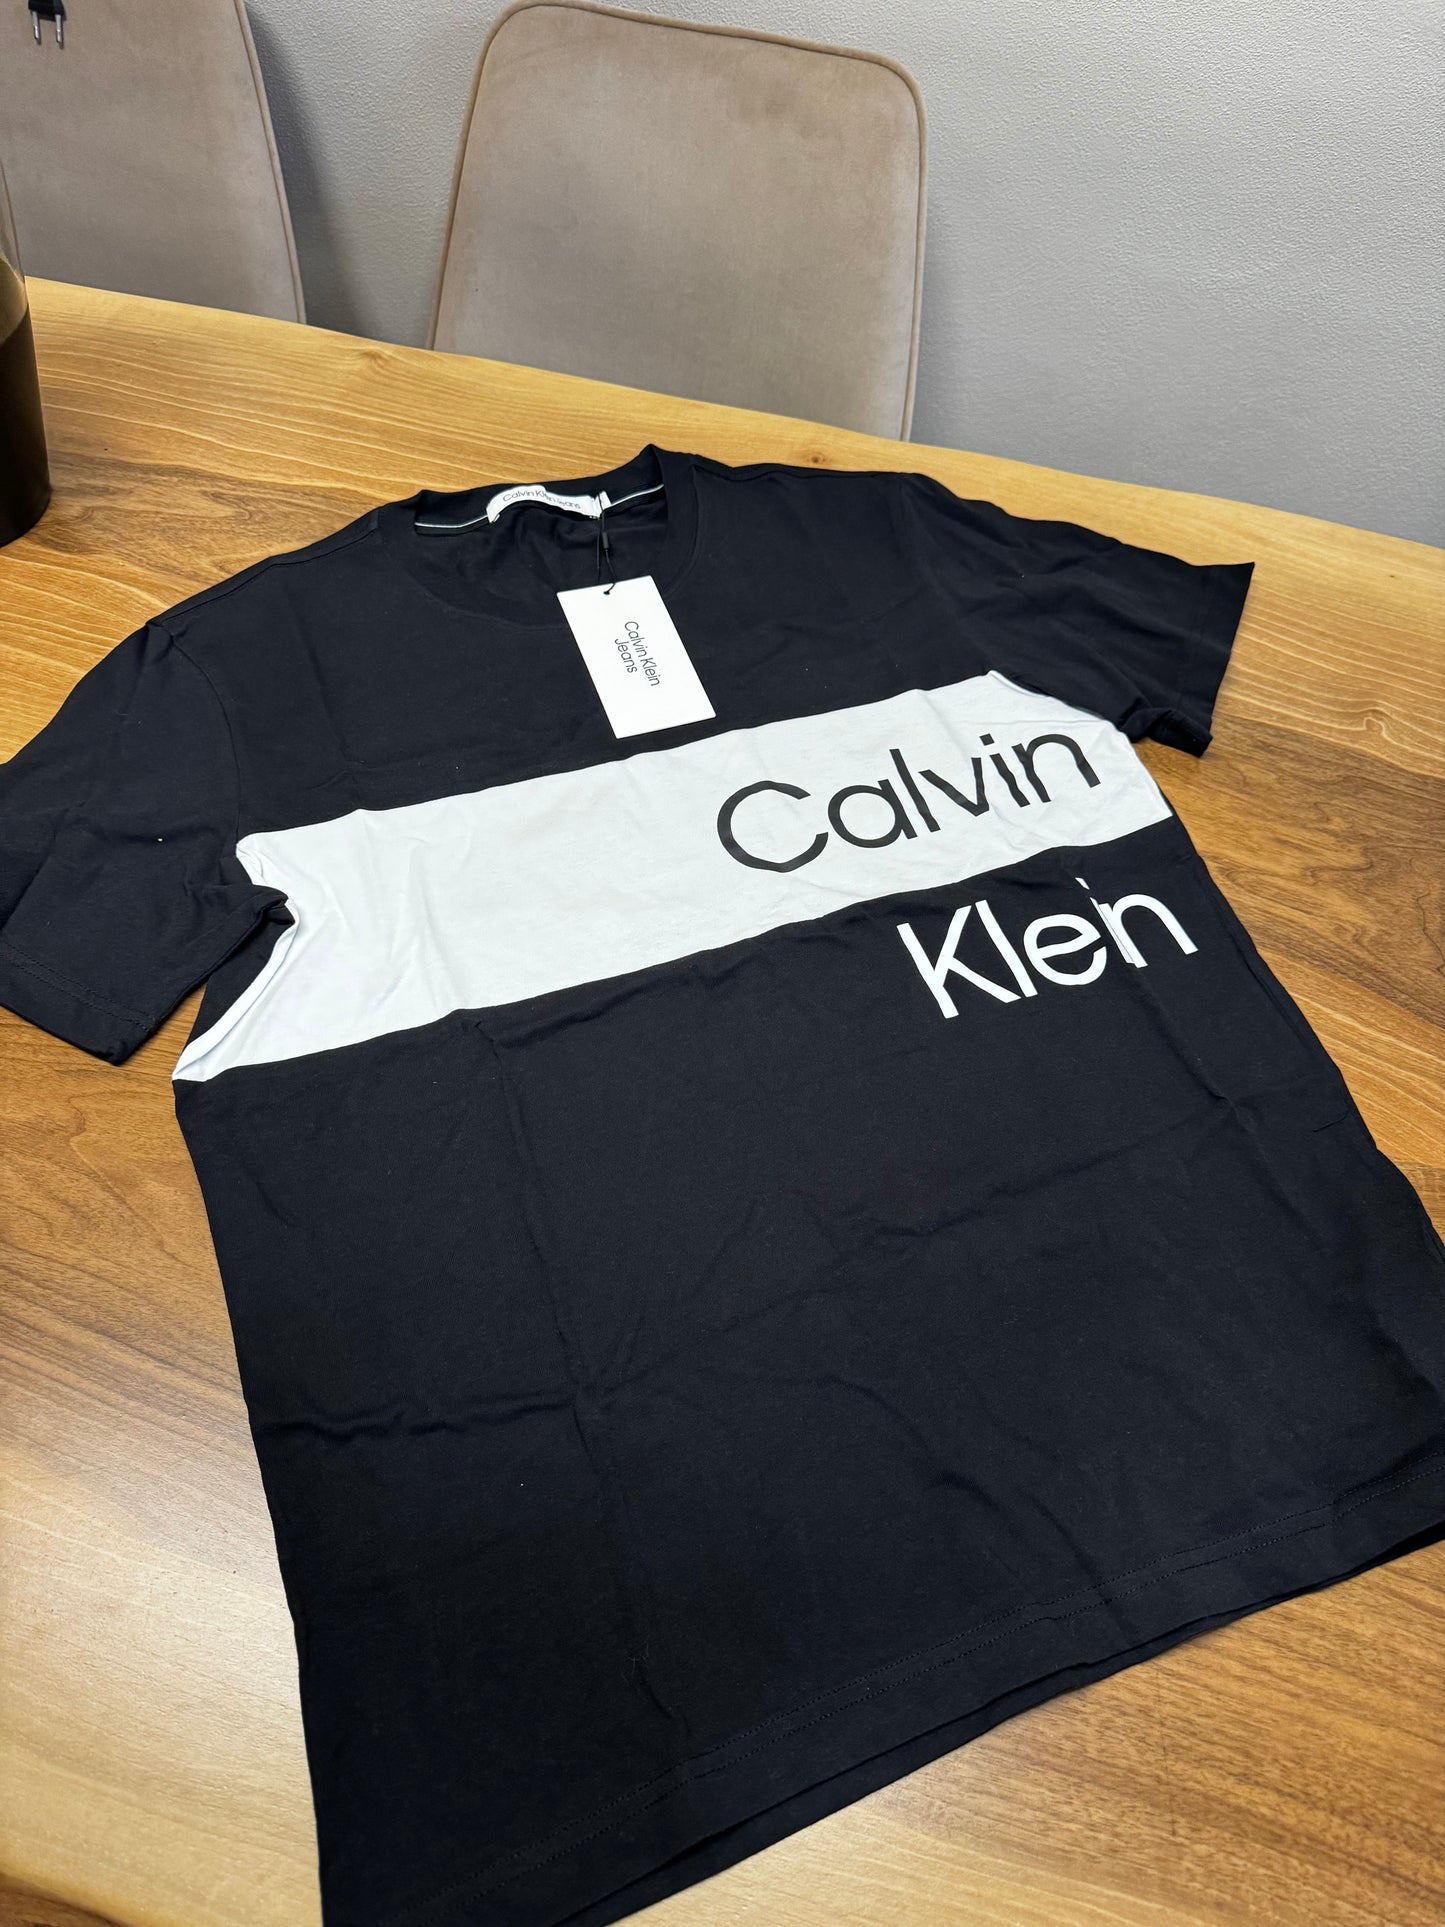 Tshirt Calvin Klein (STOCK)